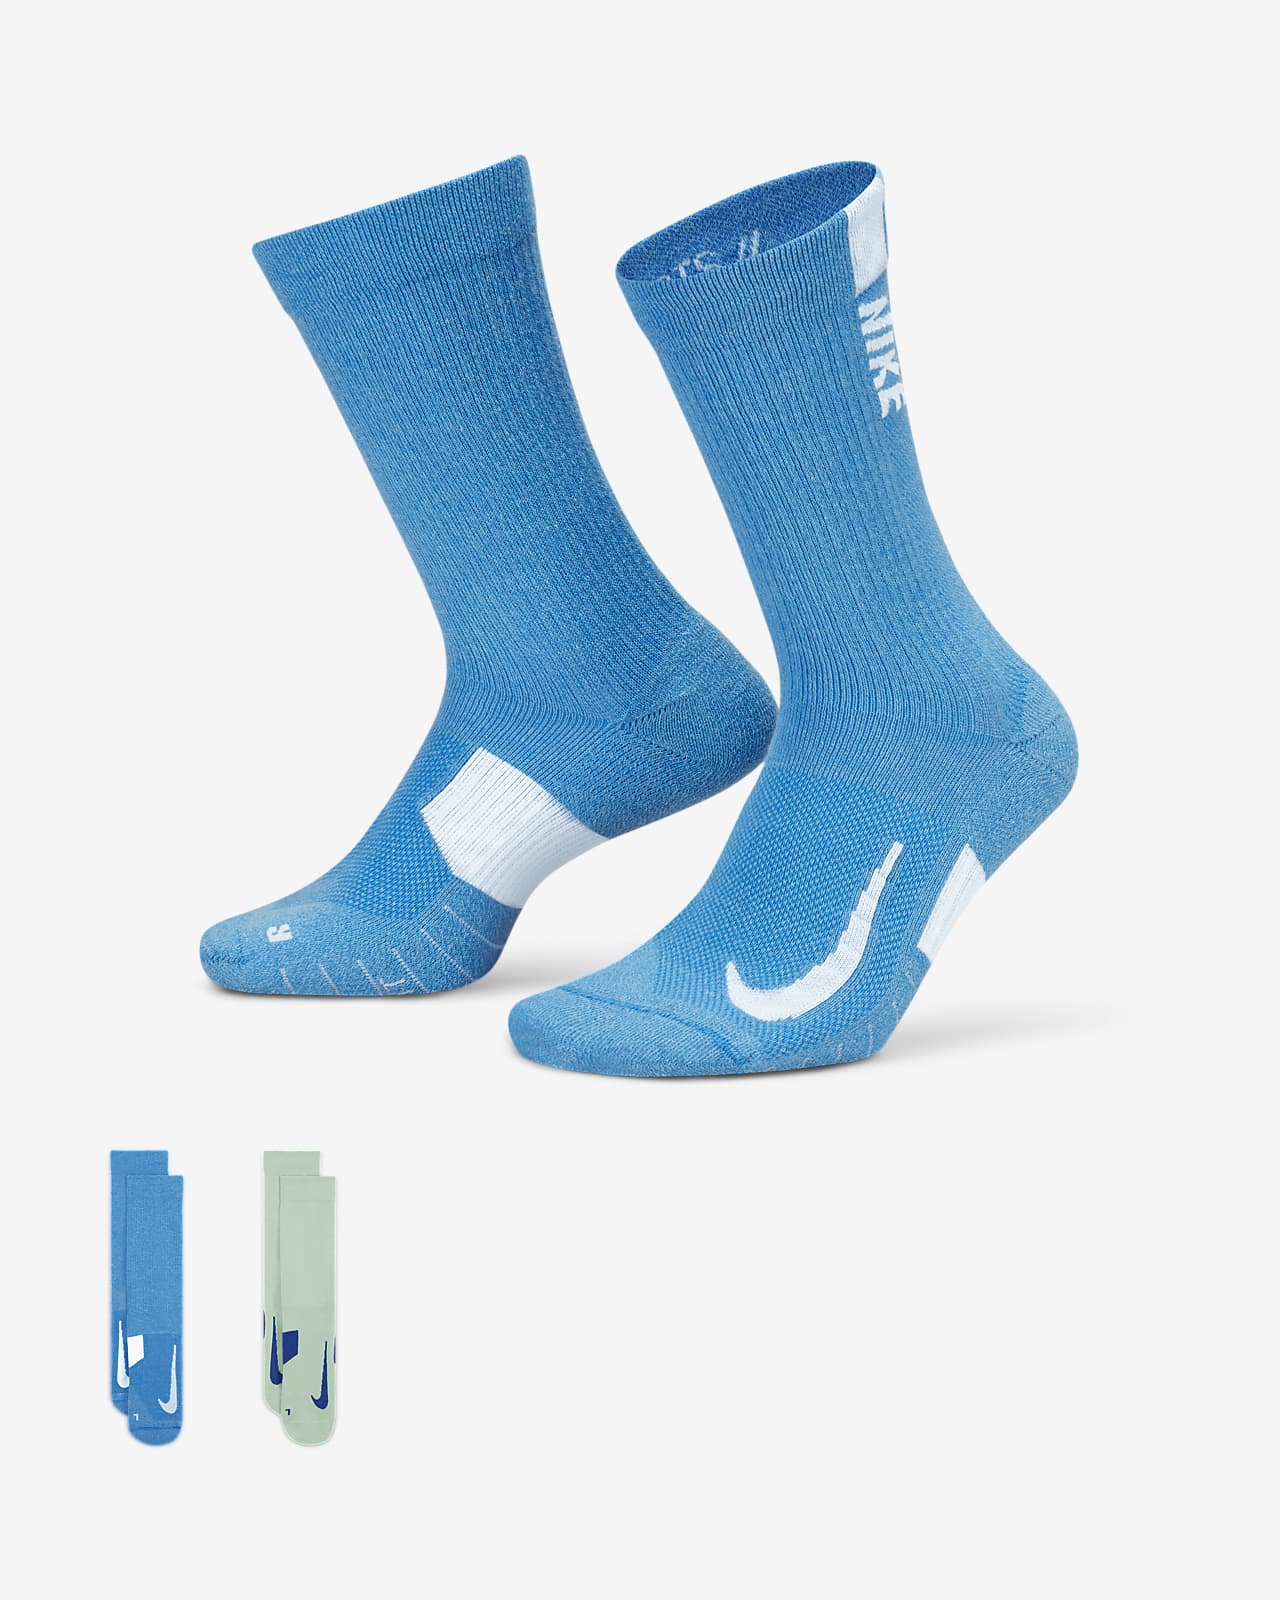 Nike Multiplier Crew Socks (2 Pairs)